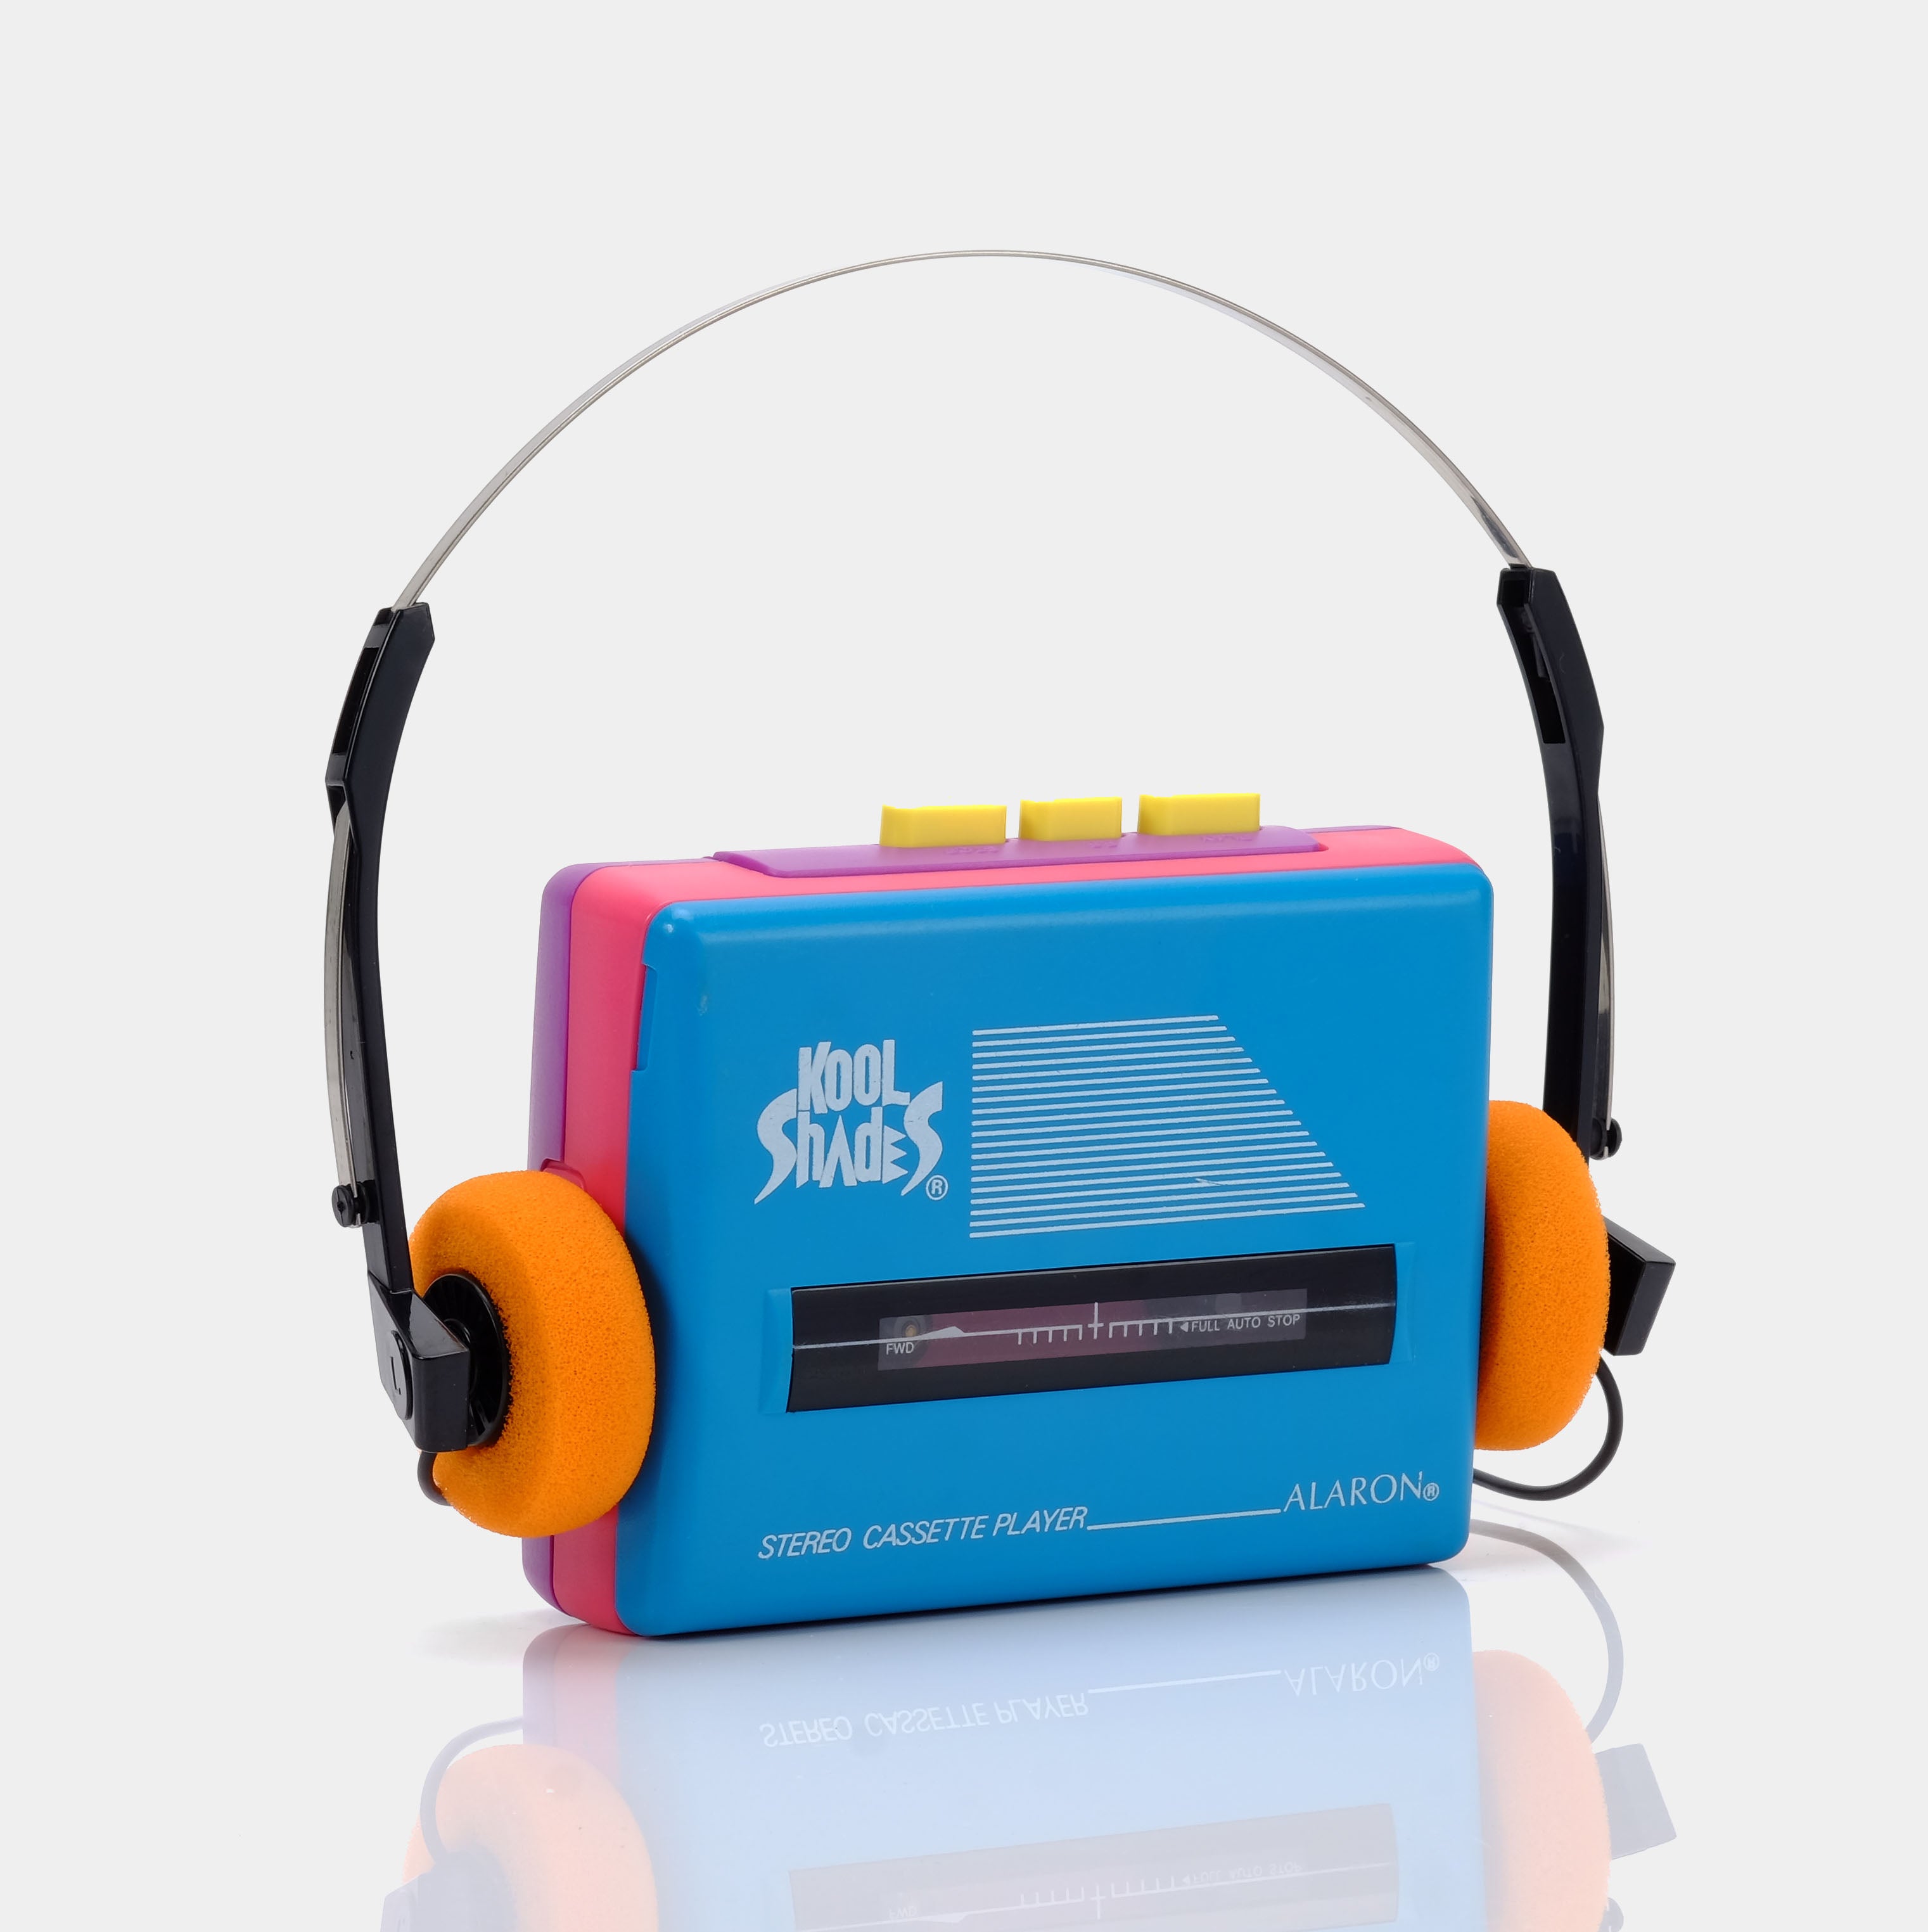 Kool Shades Portable Cassette Player